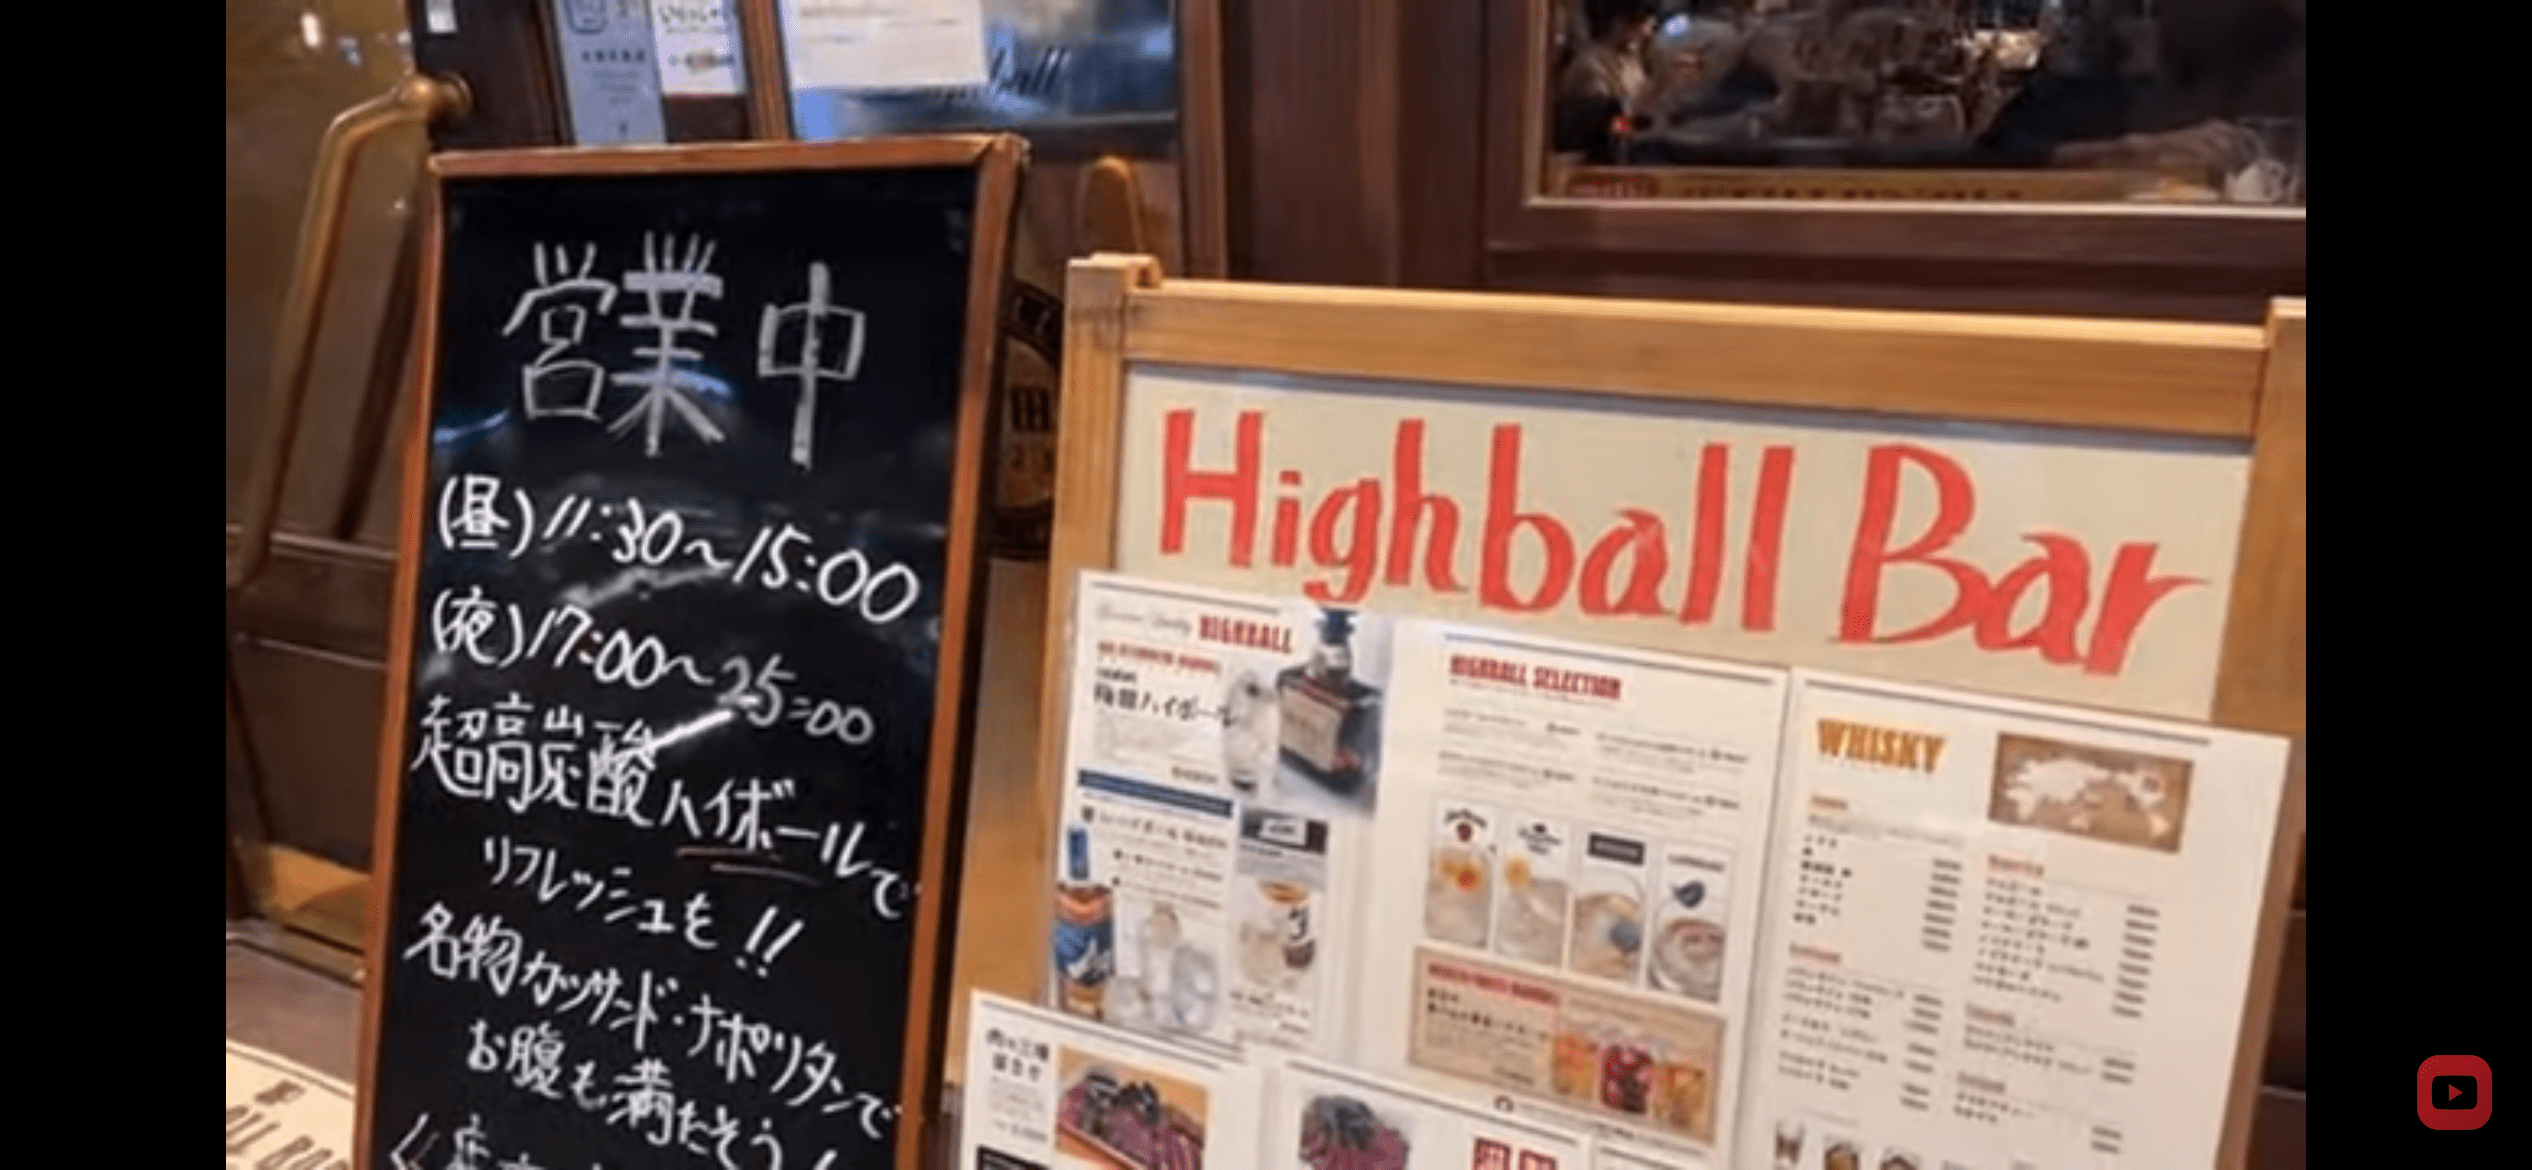 highball bar